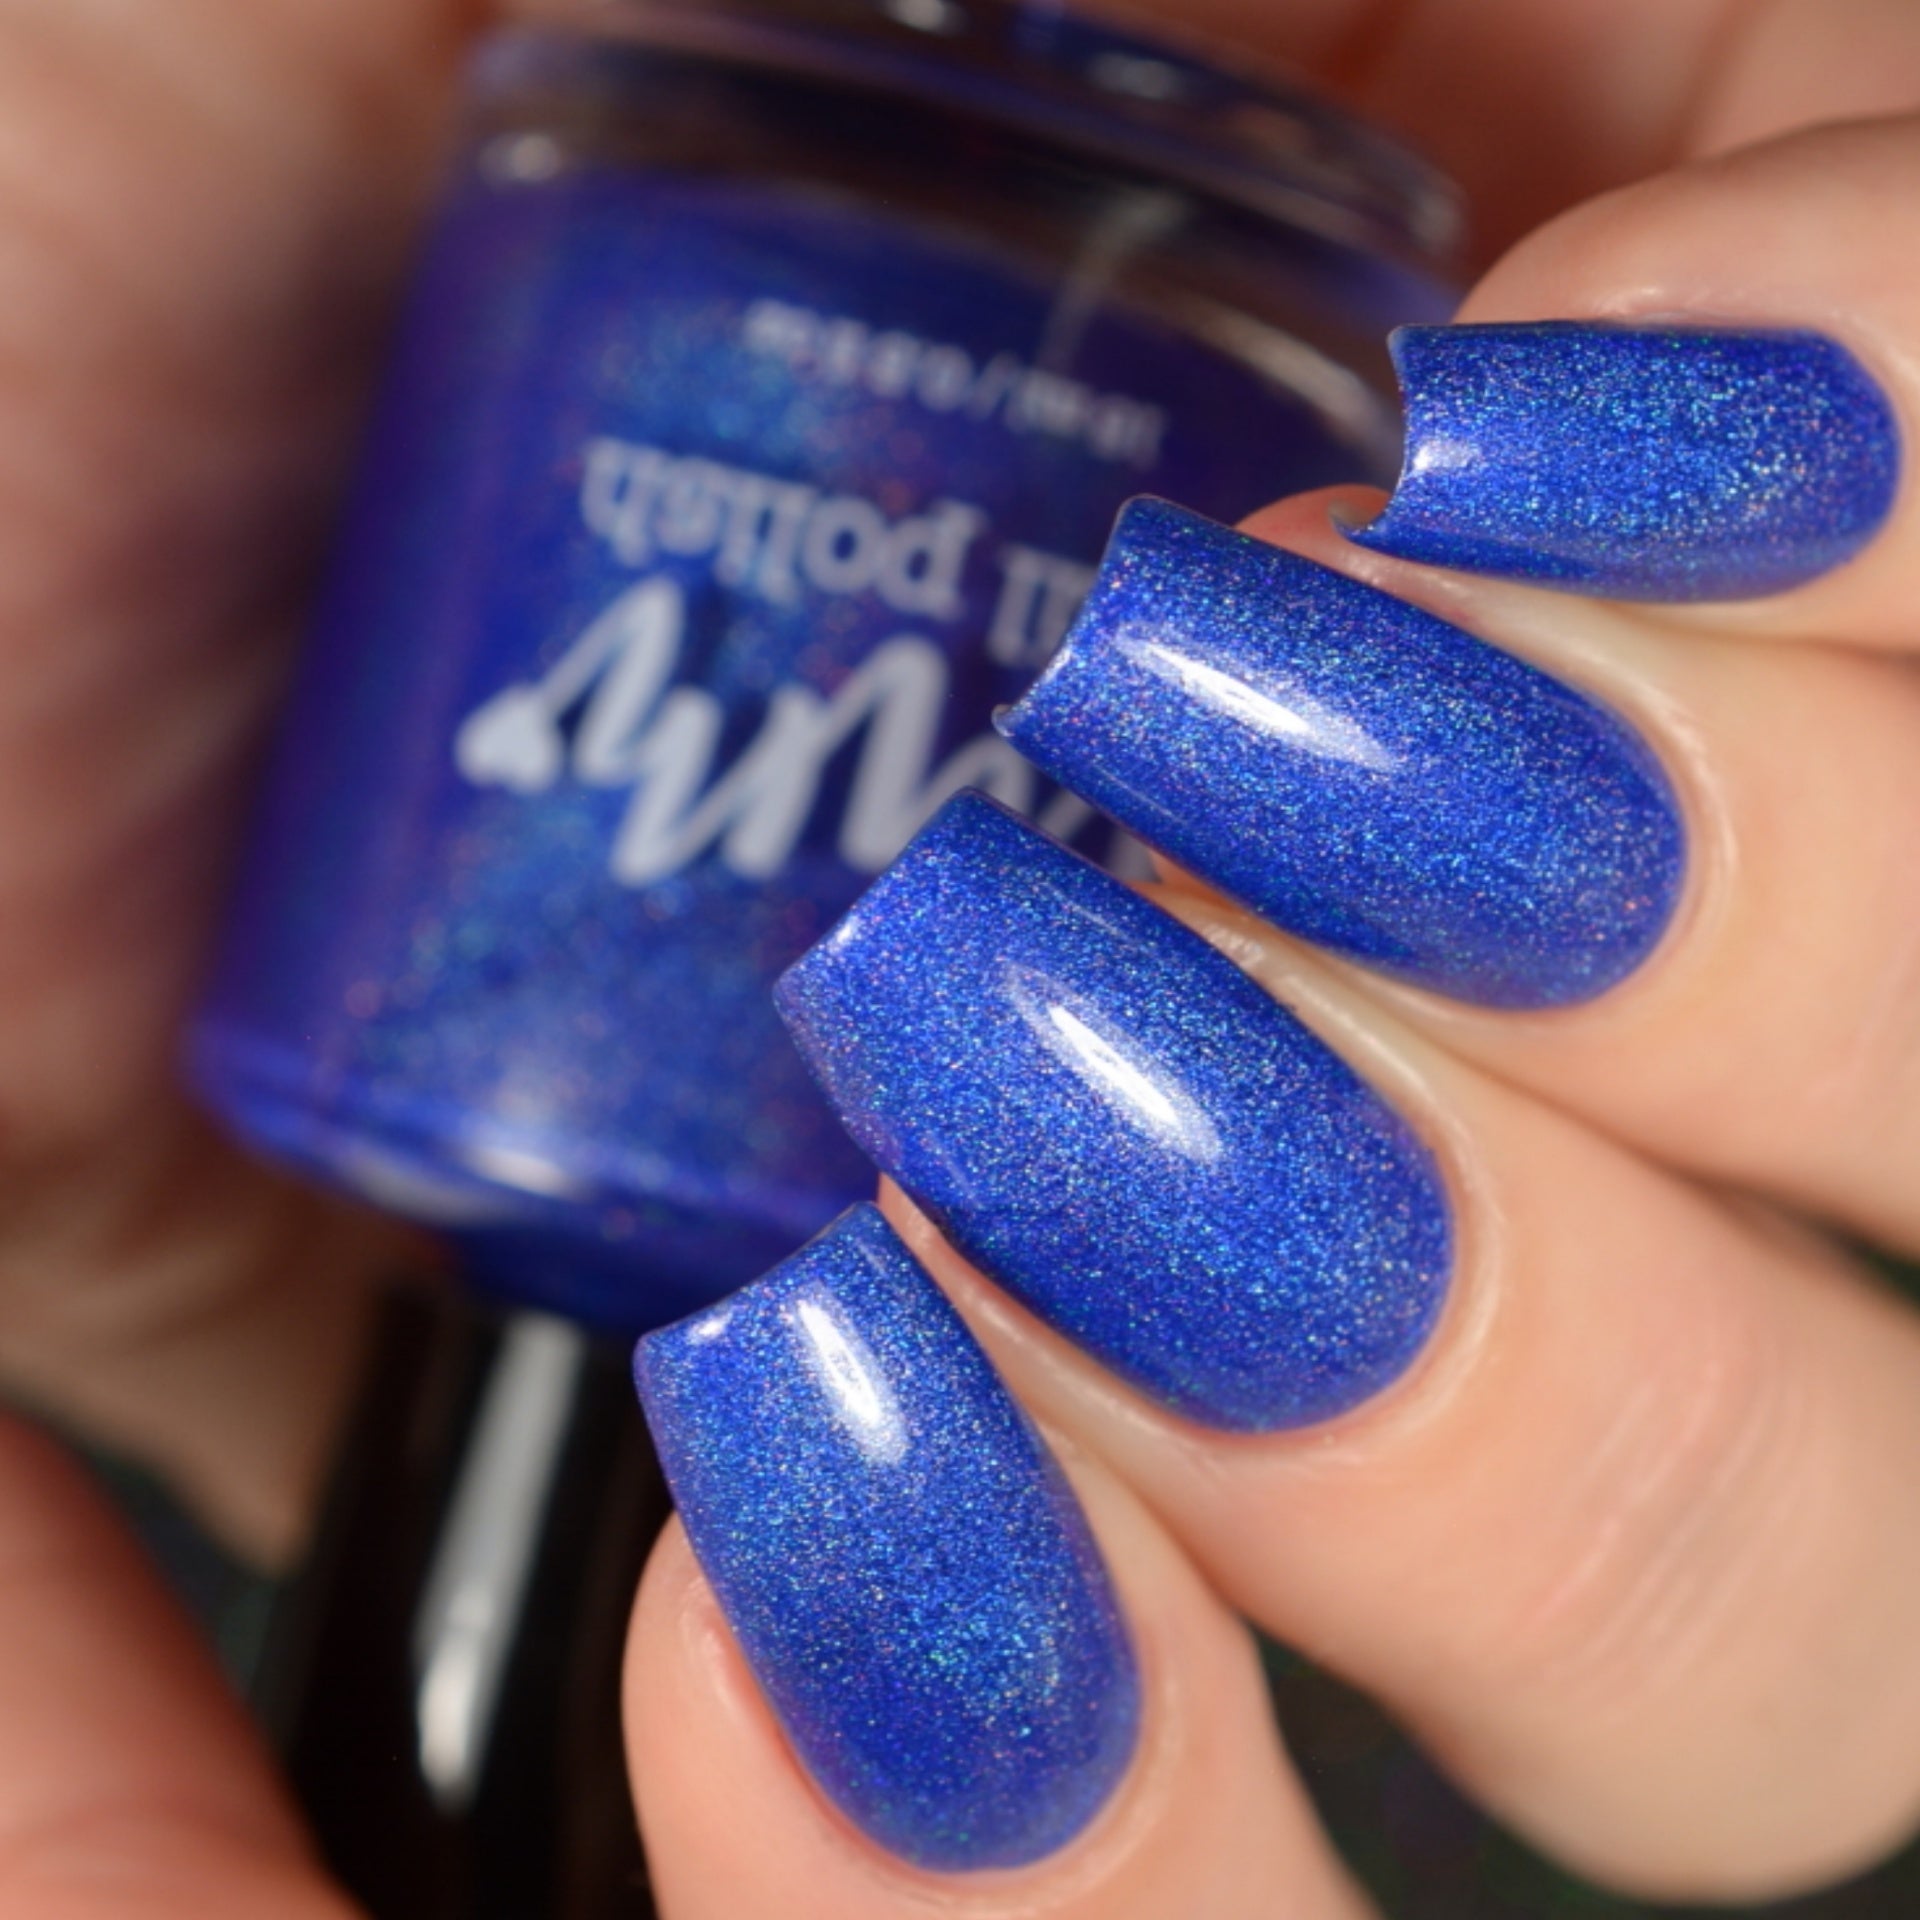 Sapphire - Blue Holographic Polish - Gemstone Collection Pt. 3 - Dam Nail Polish